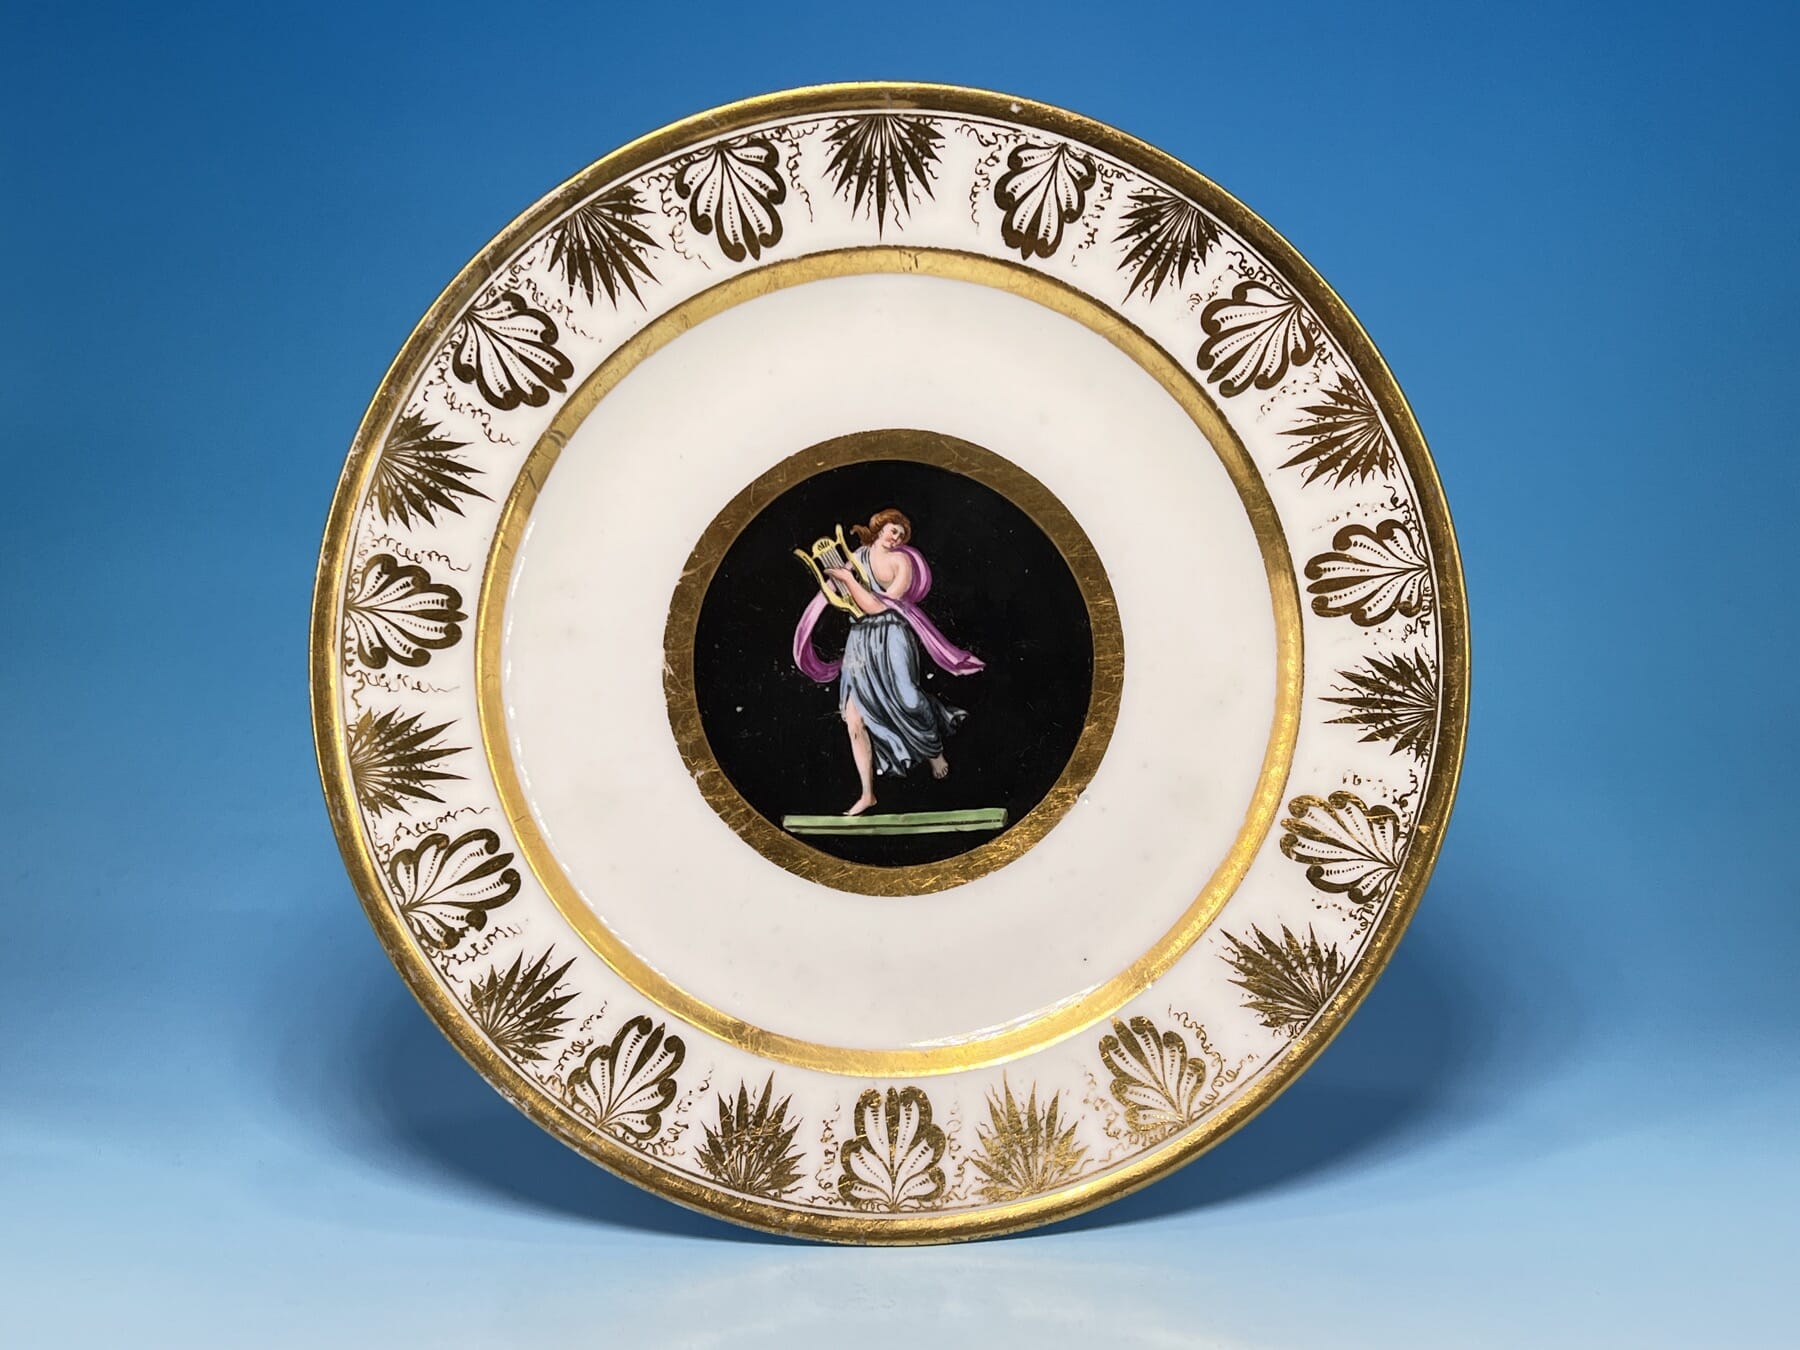 NAST Paris Porcelain pate, c1805